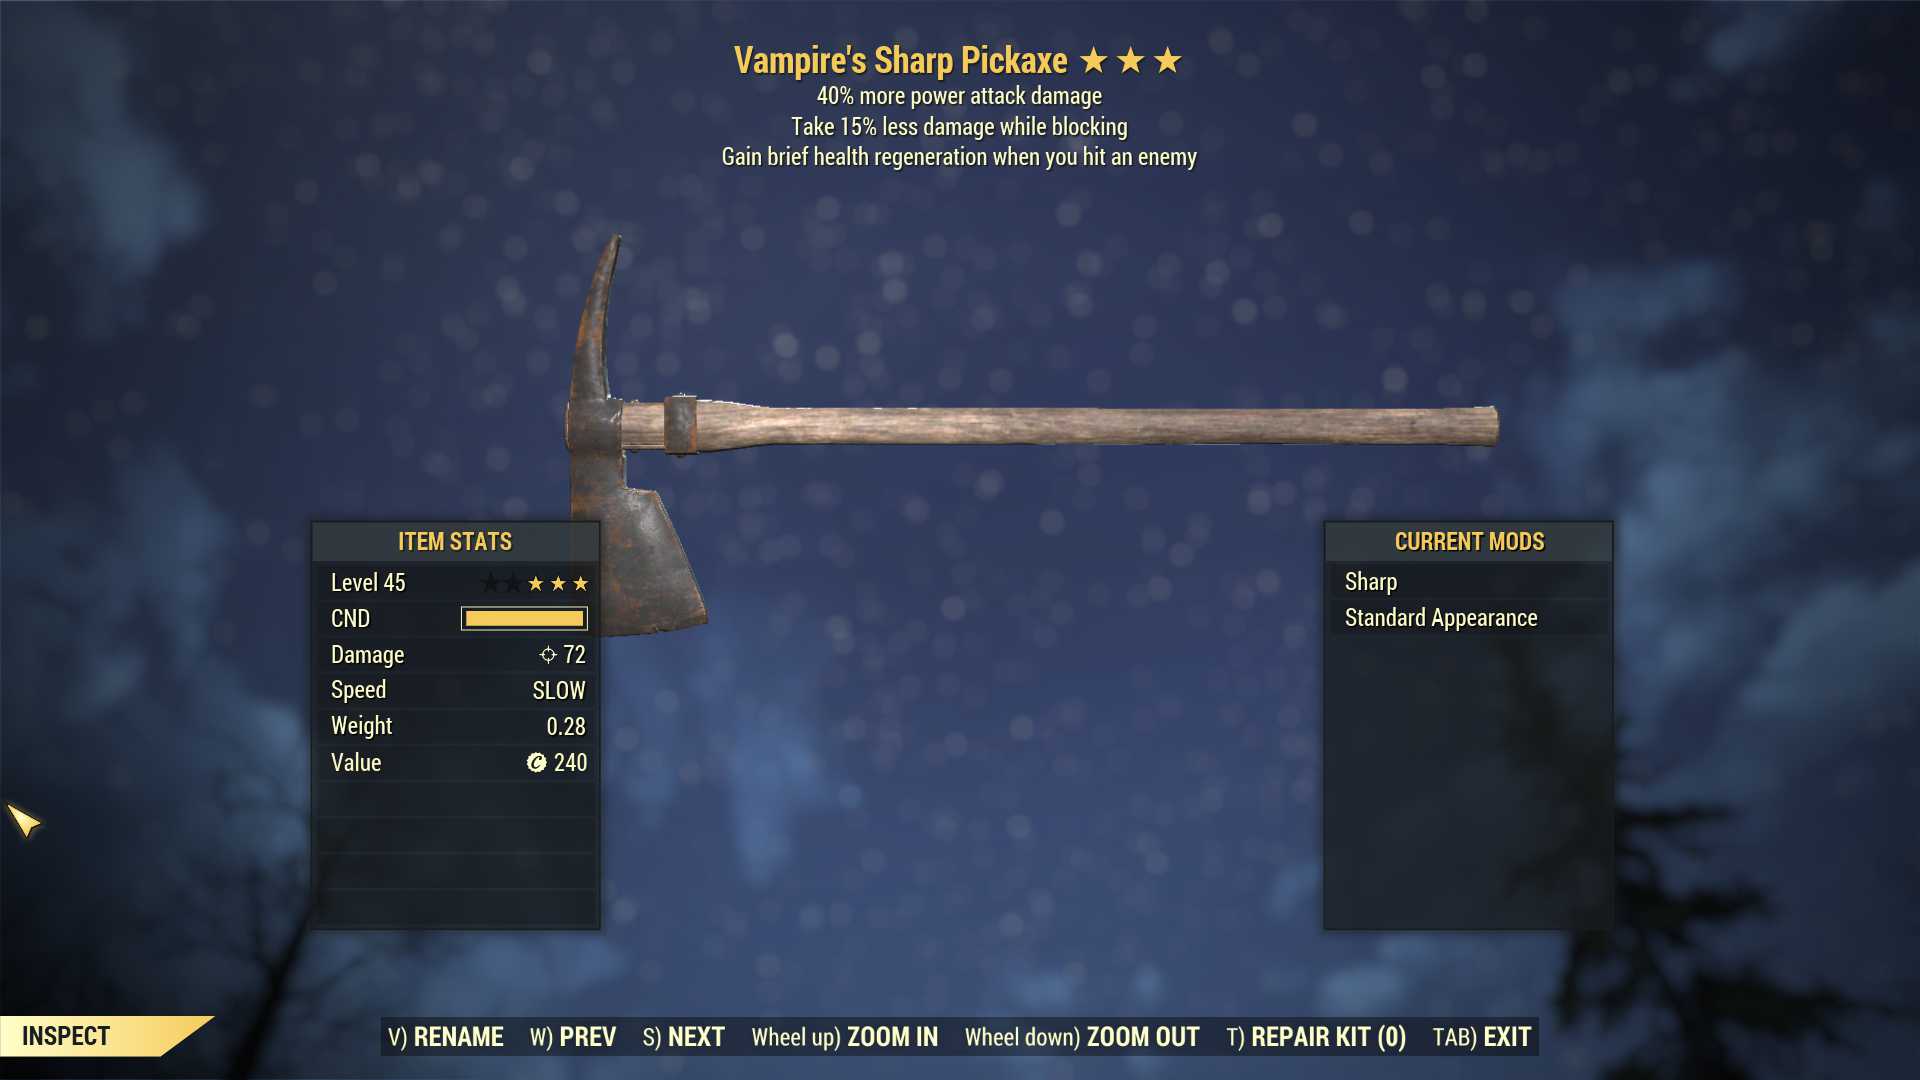 Vampire's Pickaxe (+40% damage PA, Take 15% less damage WB)